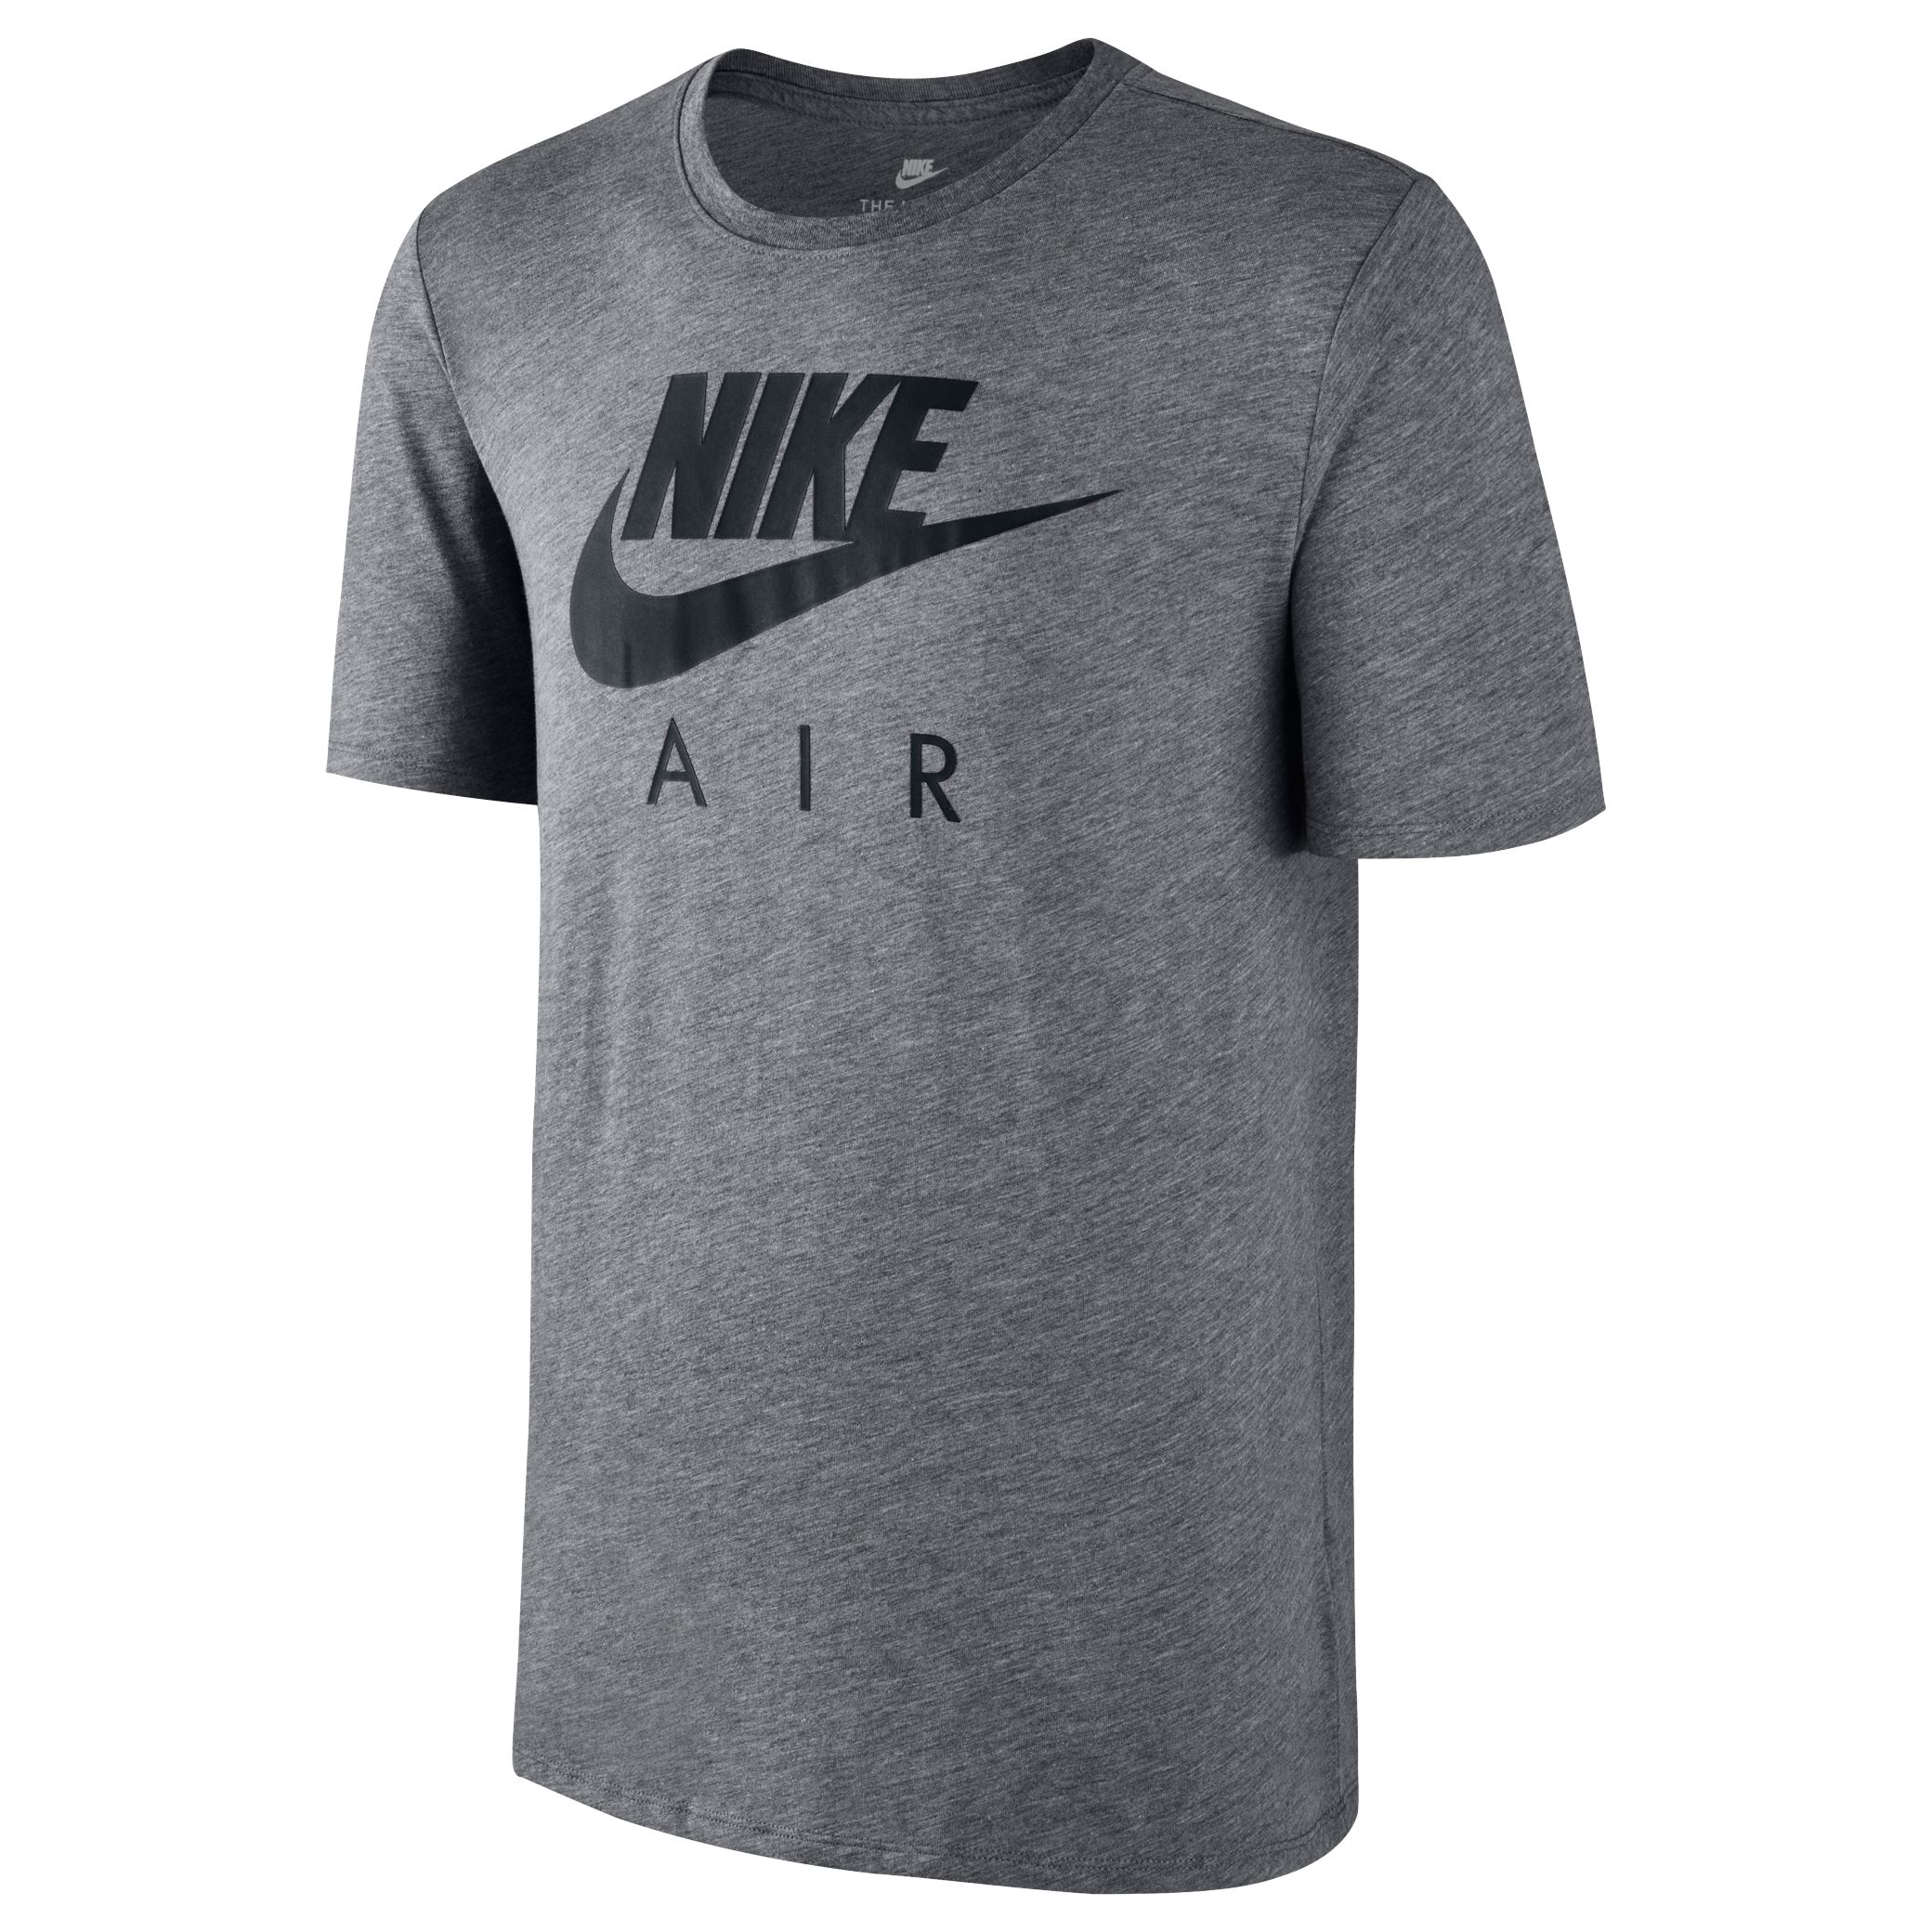 Nike Sportswear Air T-Shirt, Carbon Heather/Black, M